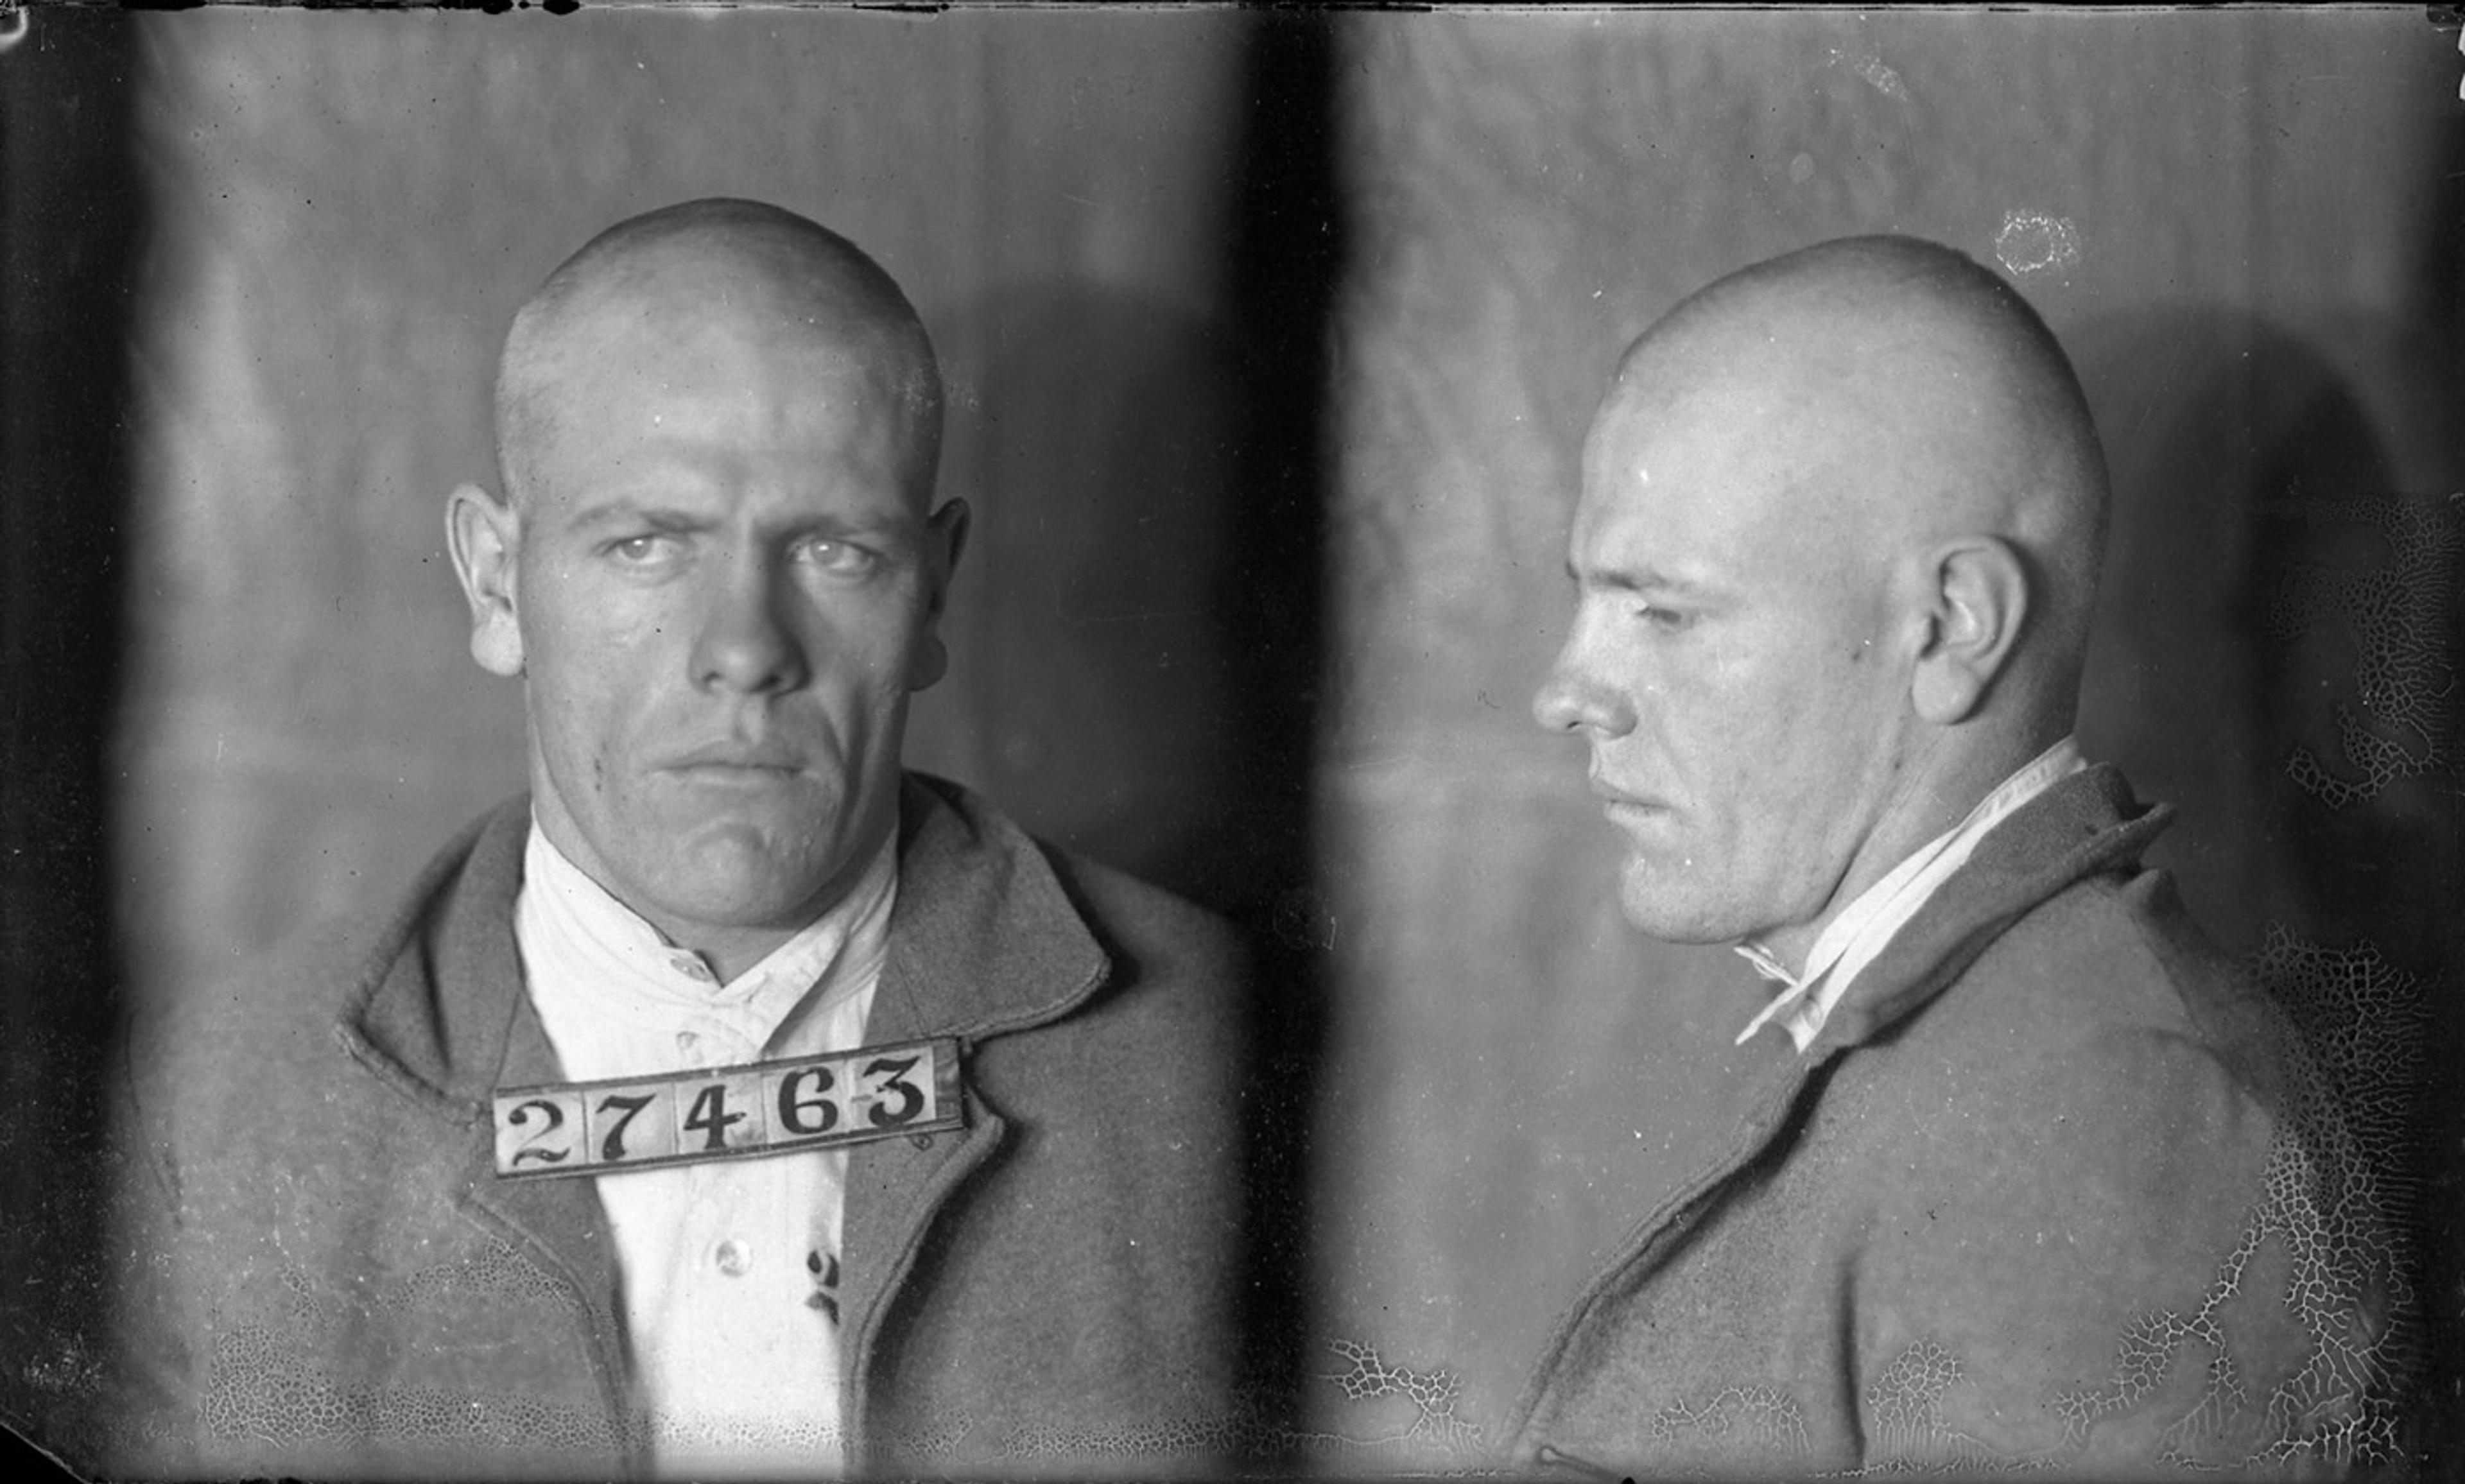 <p>Arthur Defenbaugh, inmate #27463 photographed in 1924. <em>Courtesy Missouri State Archives</em></p>